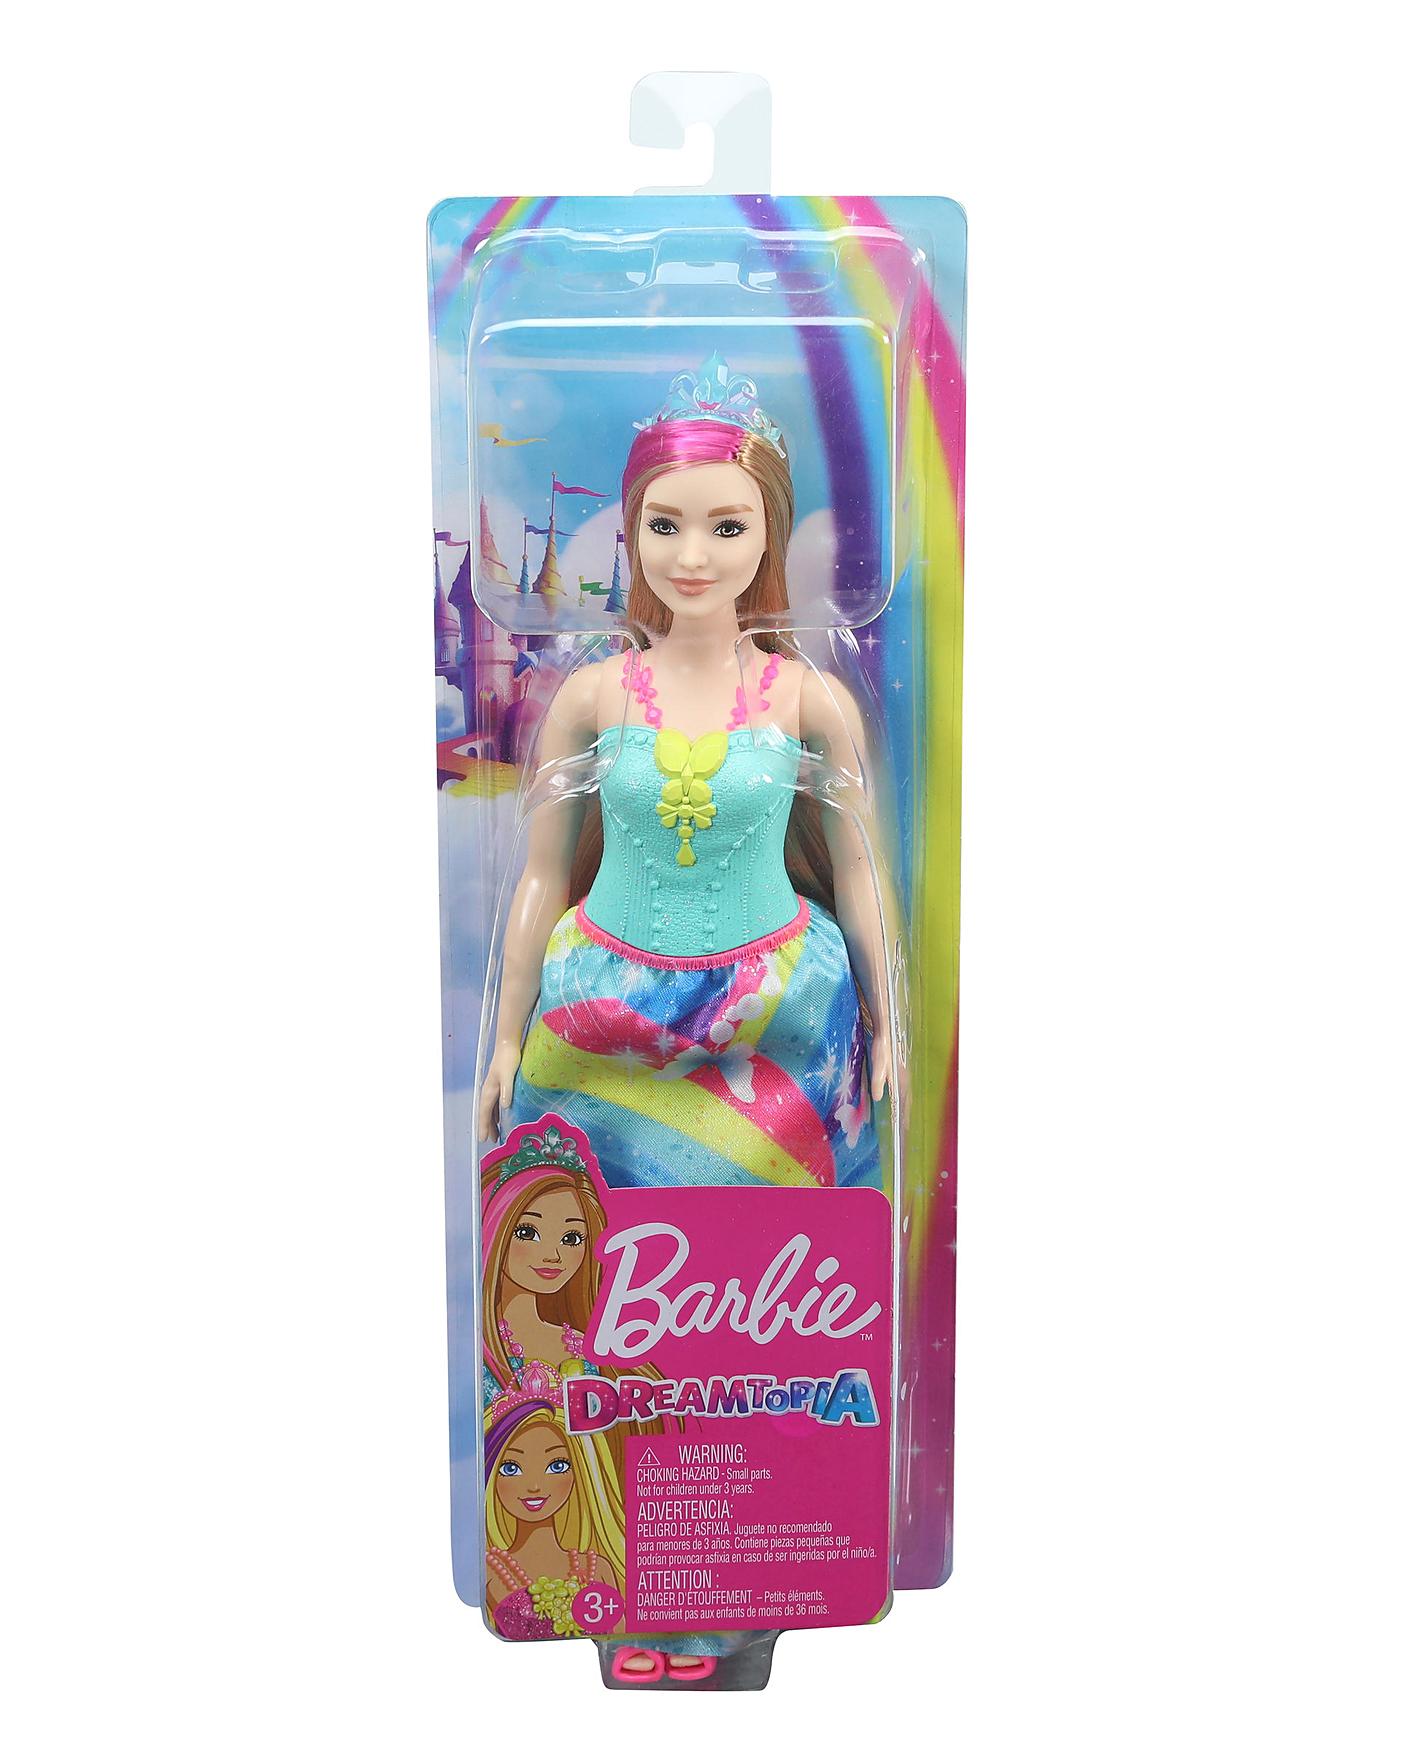 dreamtopia princess barbie